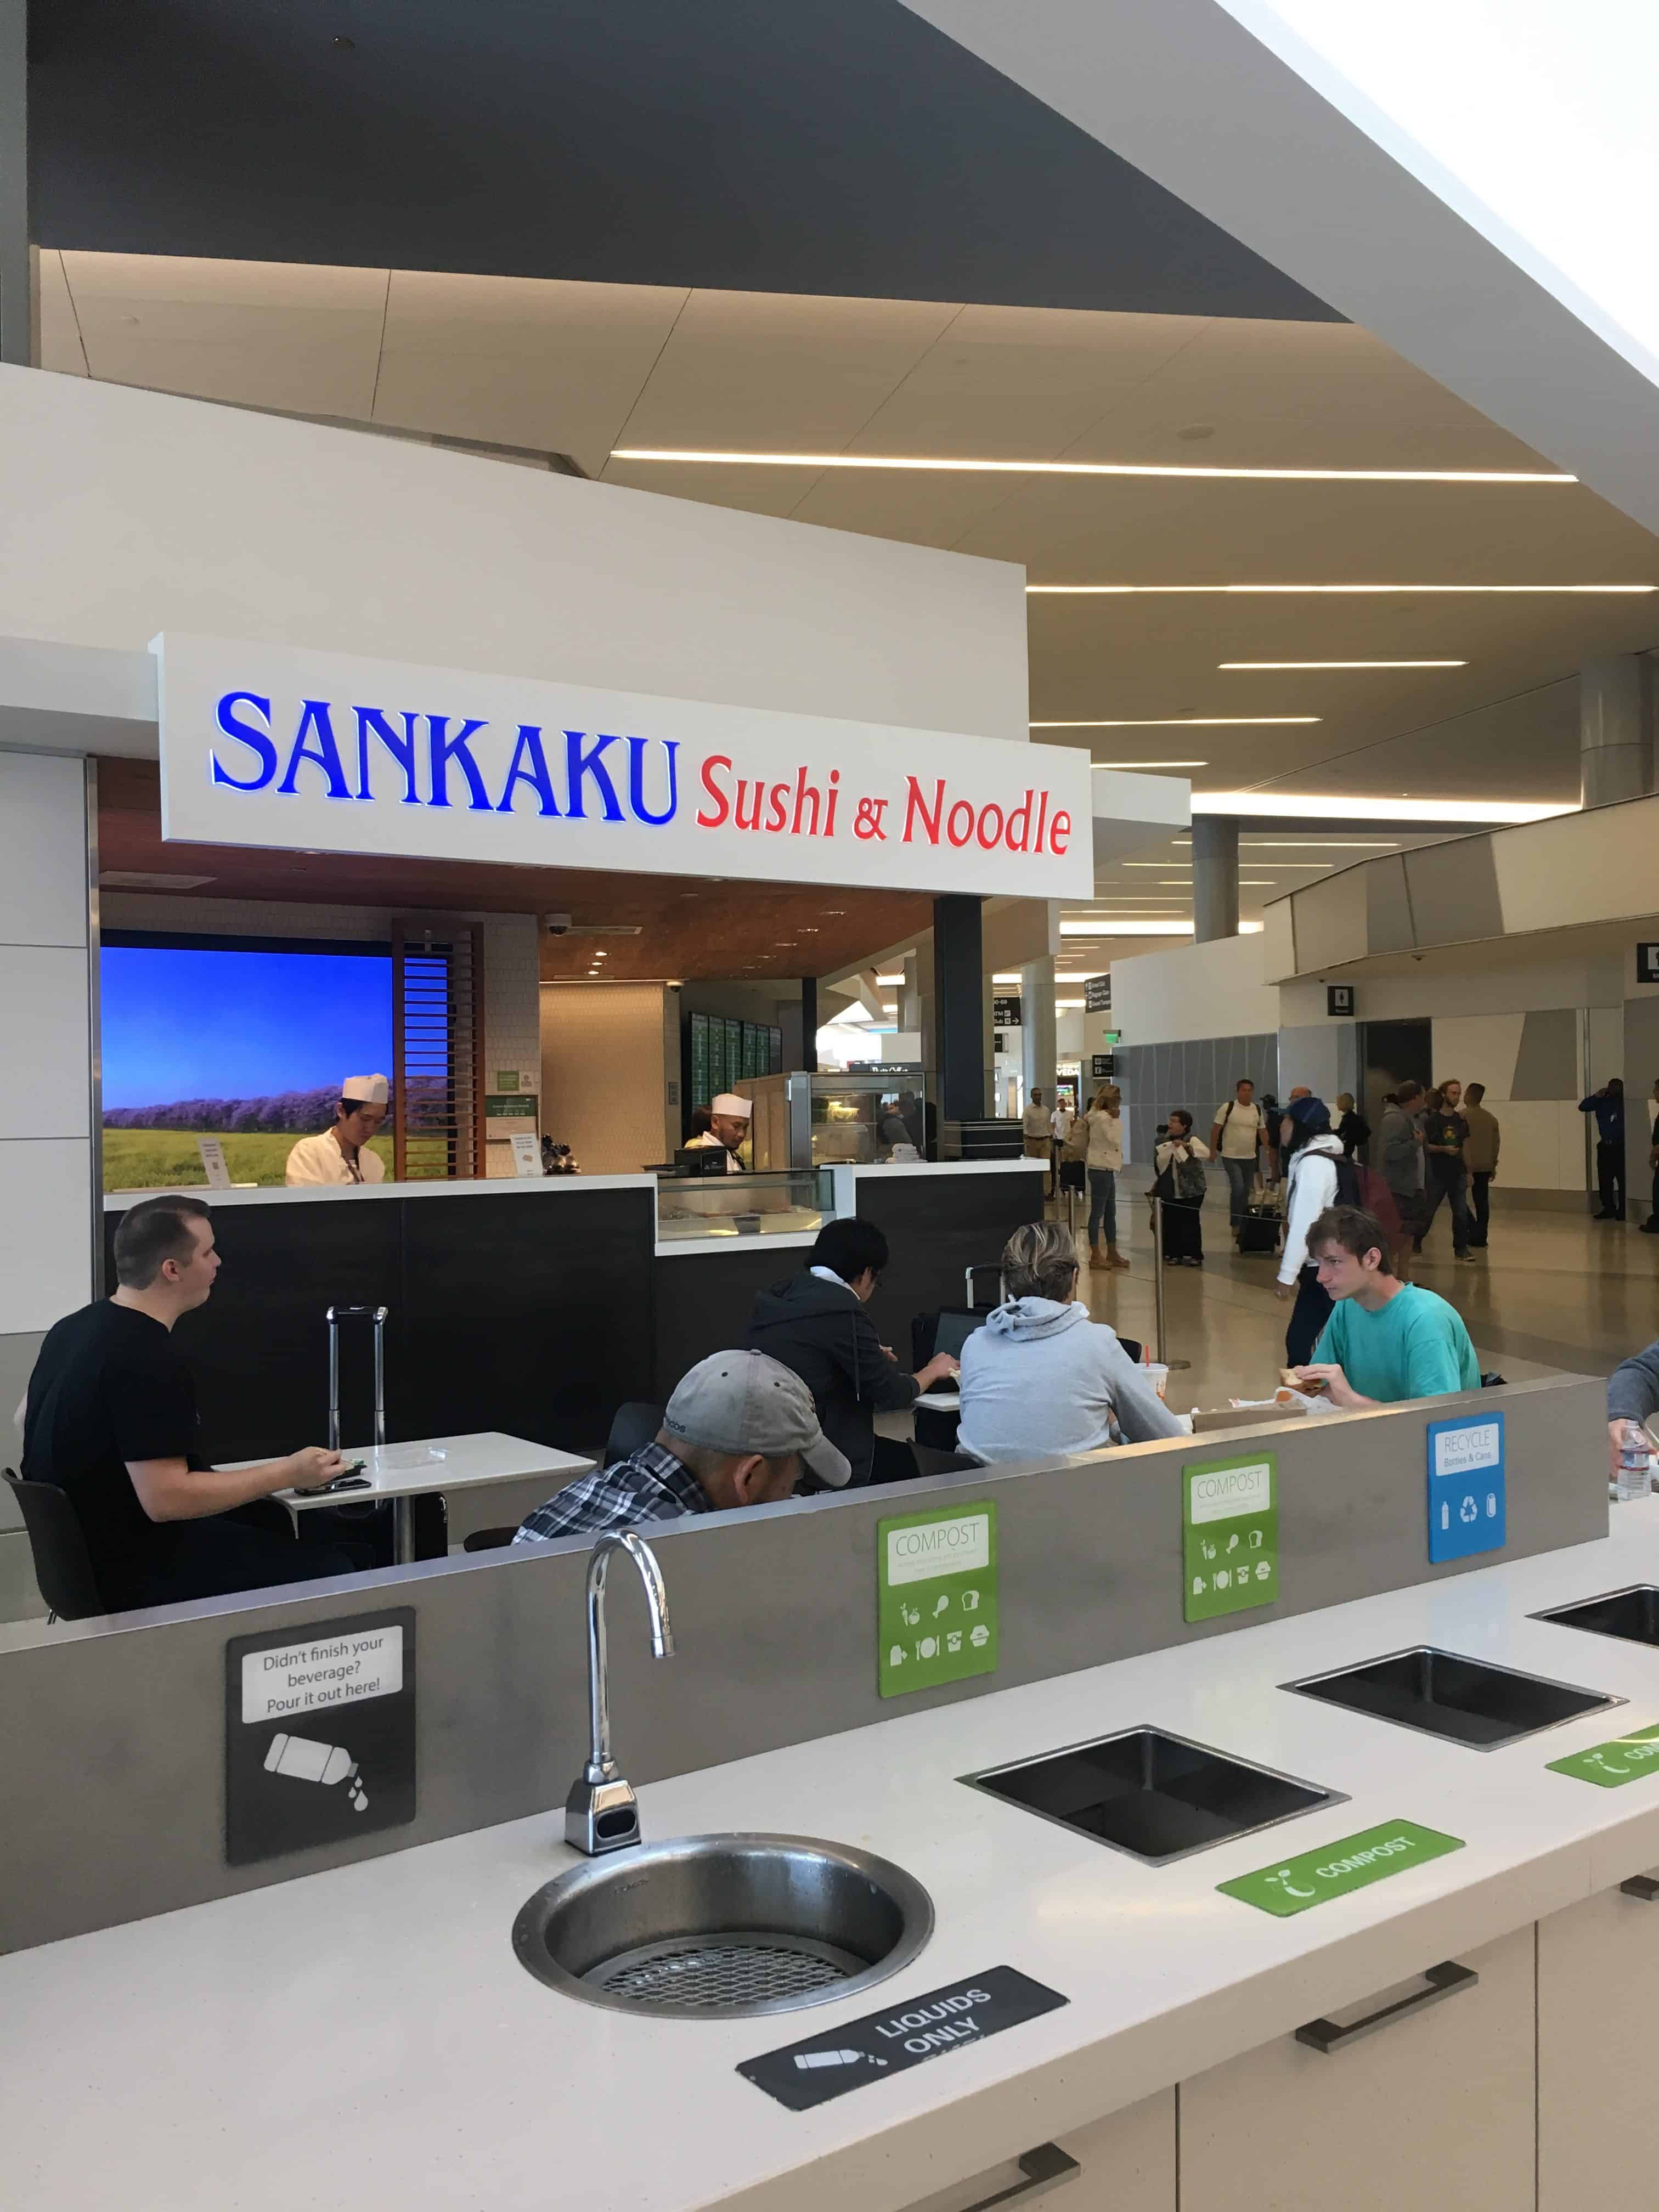 Photo of the Sankaku Sushi & Noodles restaurant at the San Francisco International Airport. https://trimazing.com